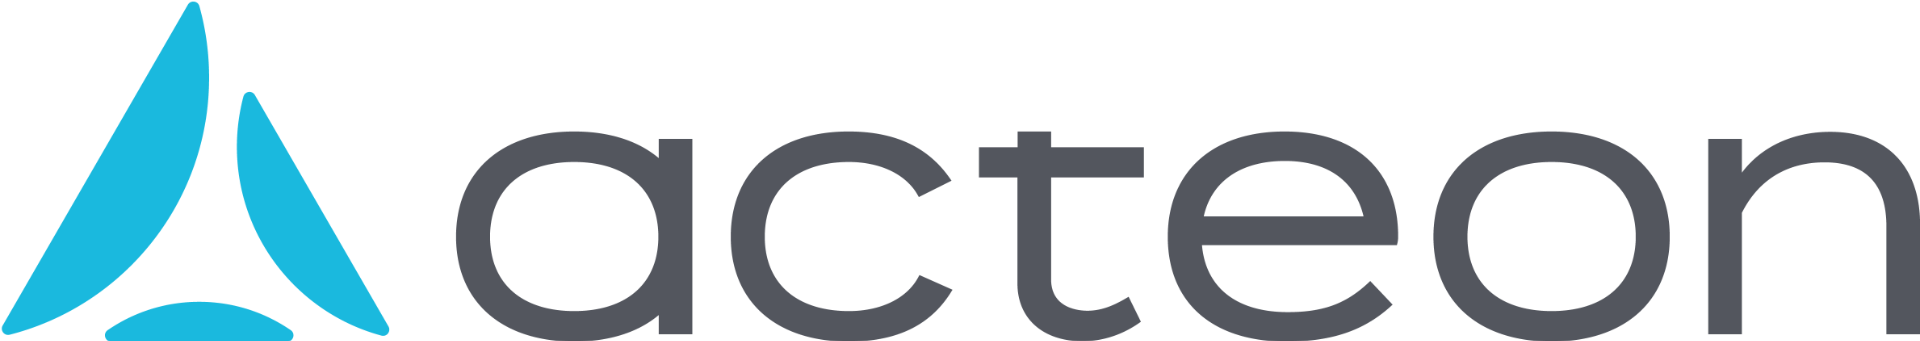 acteon logo